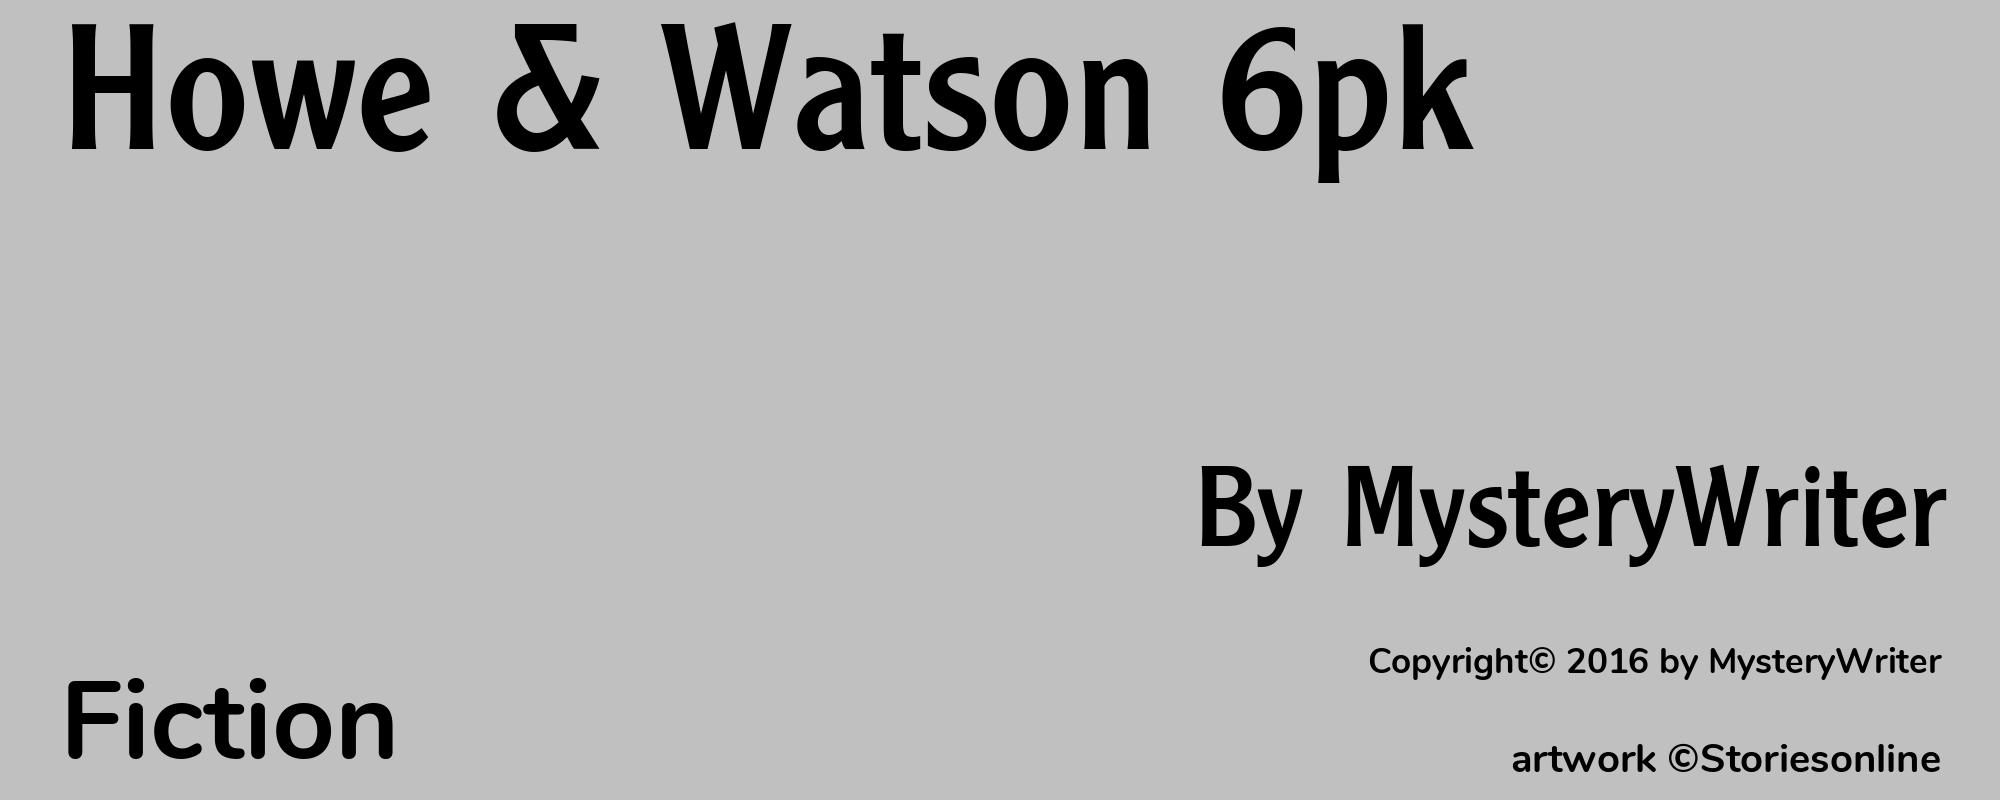 Howe & Watson 6pk - Cover